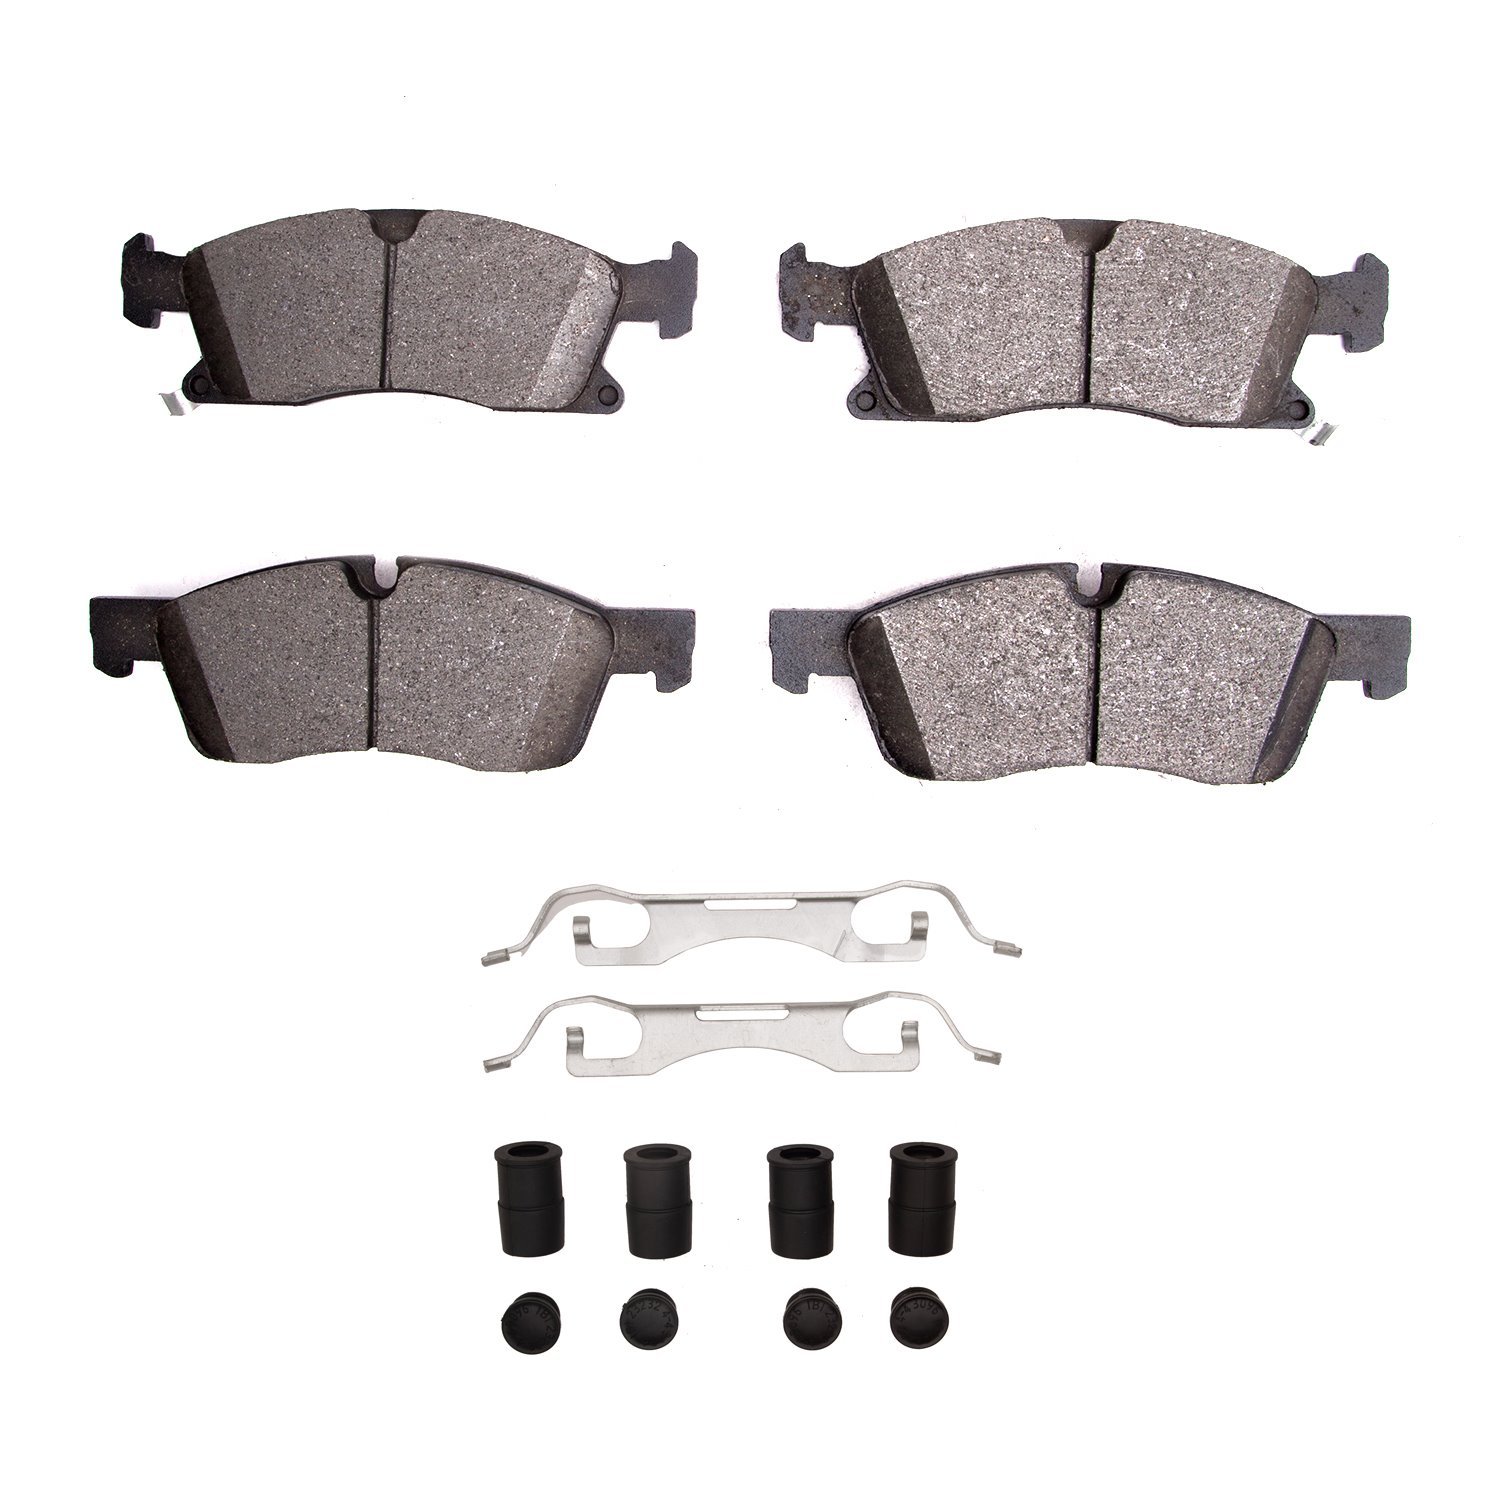 1600-1904-11 5000 Euro Ceramic Brake Pads & Hardware Kit, Fits Select Multiple Makes/Models, Position: Front